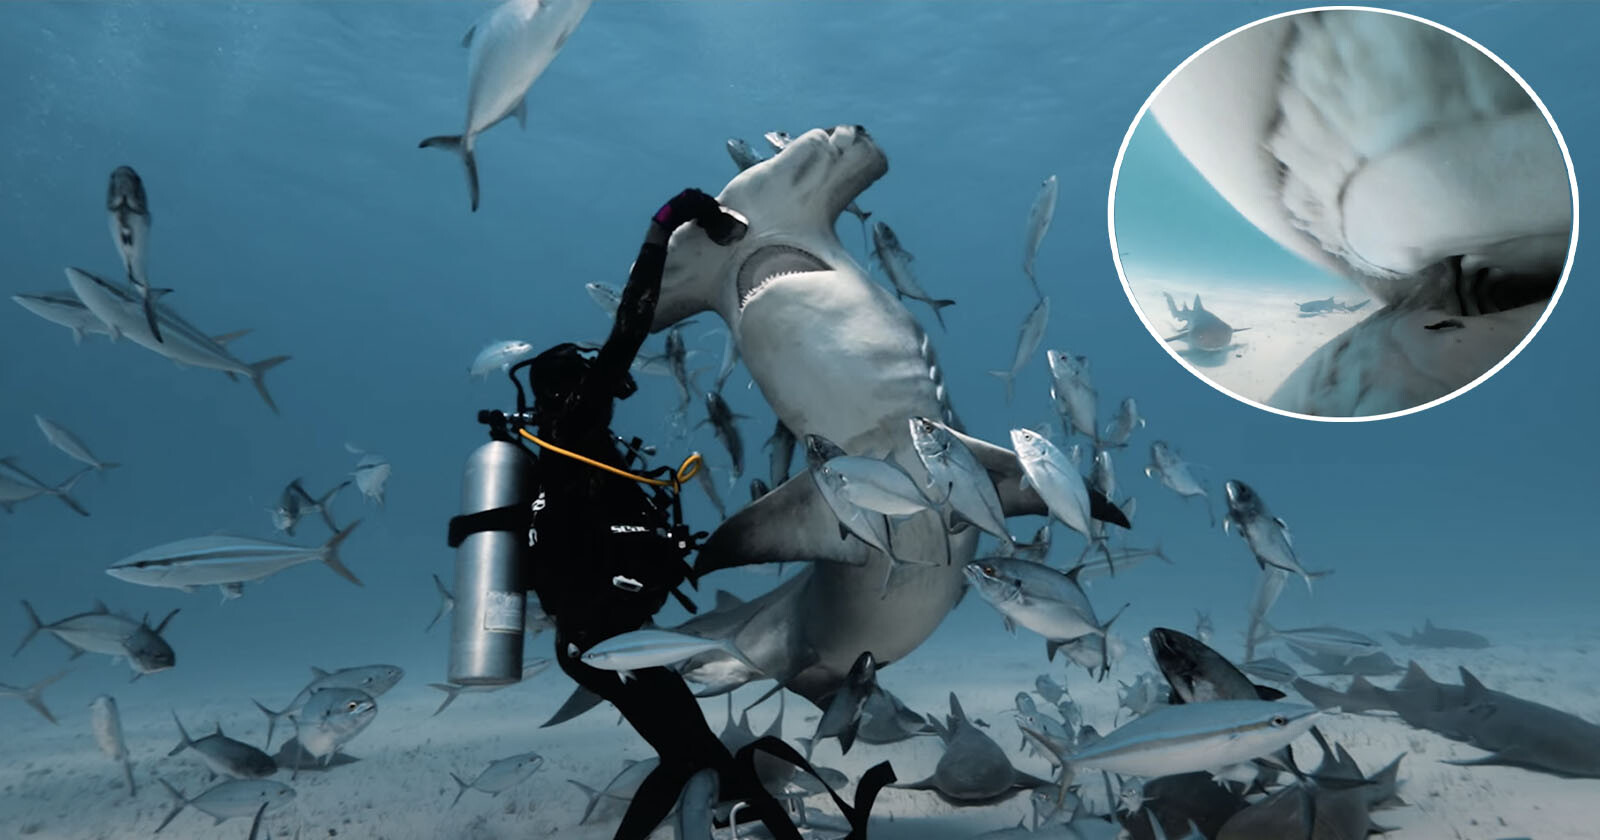  inside mouth giant hammerhead shark insane footage 